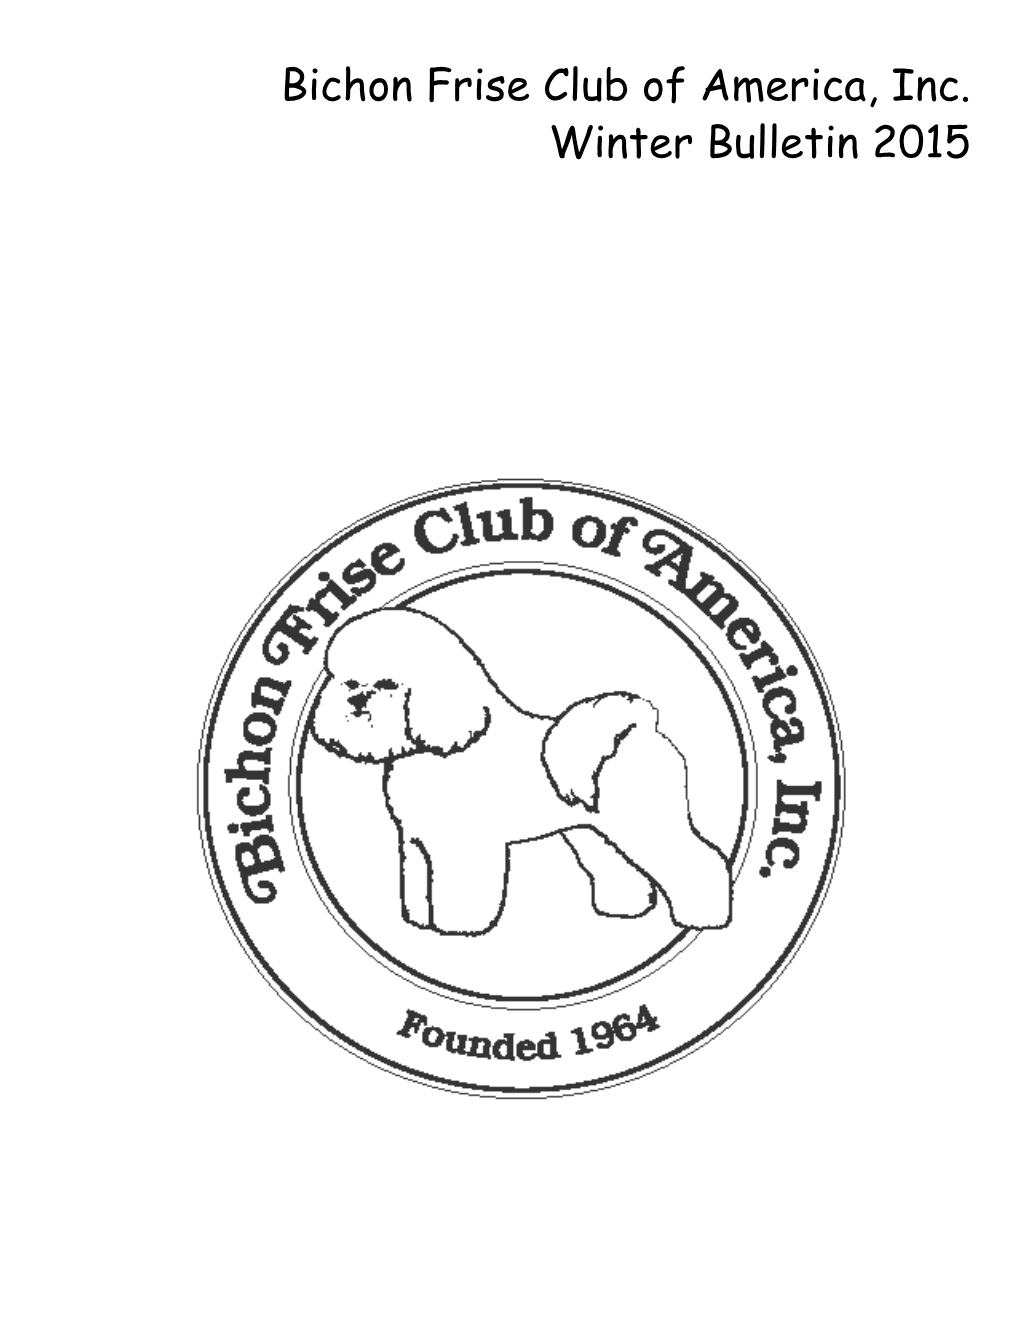 Bichon Frise Club of America, Inc. Winter Bulletin 2015